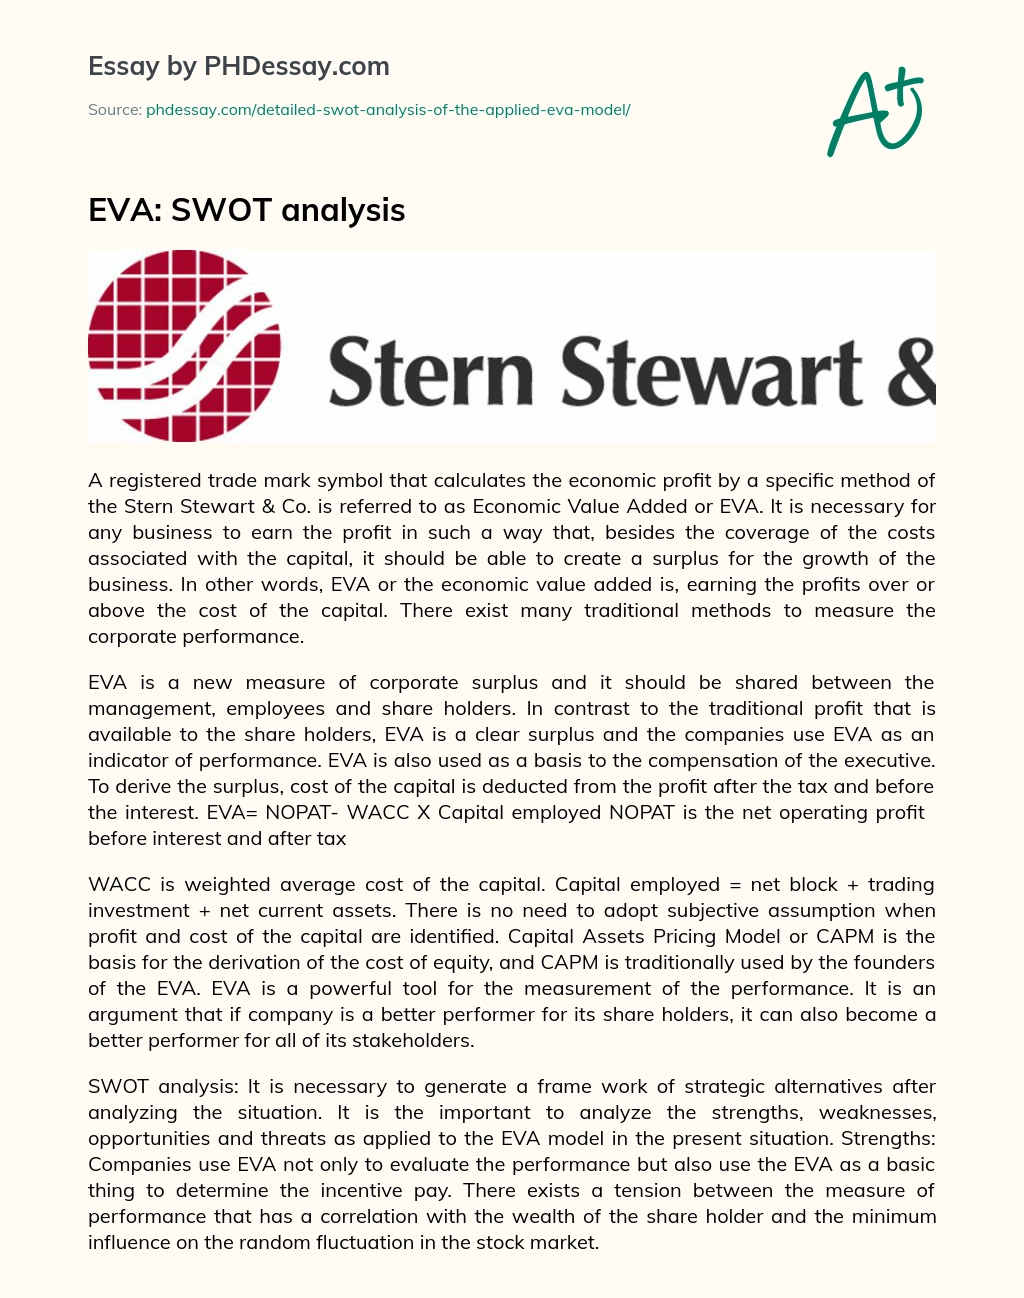 EVA: SWOT analysis essay